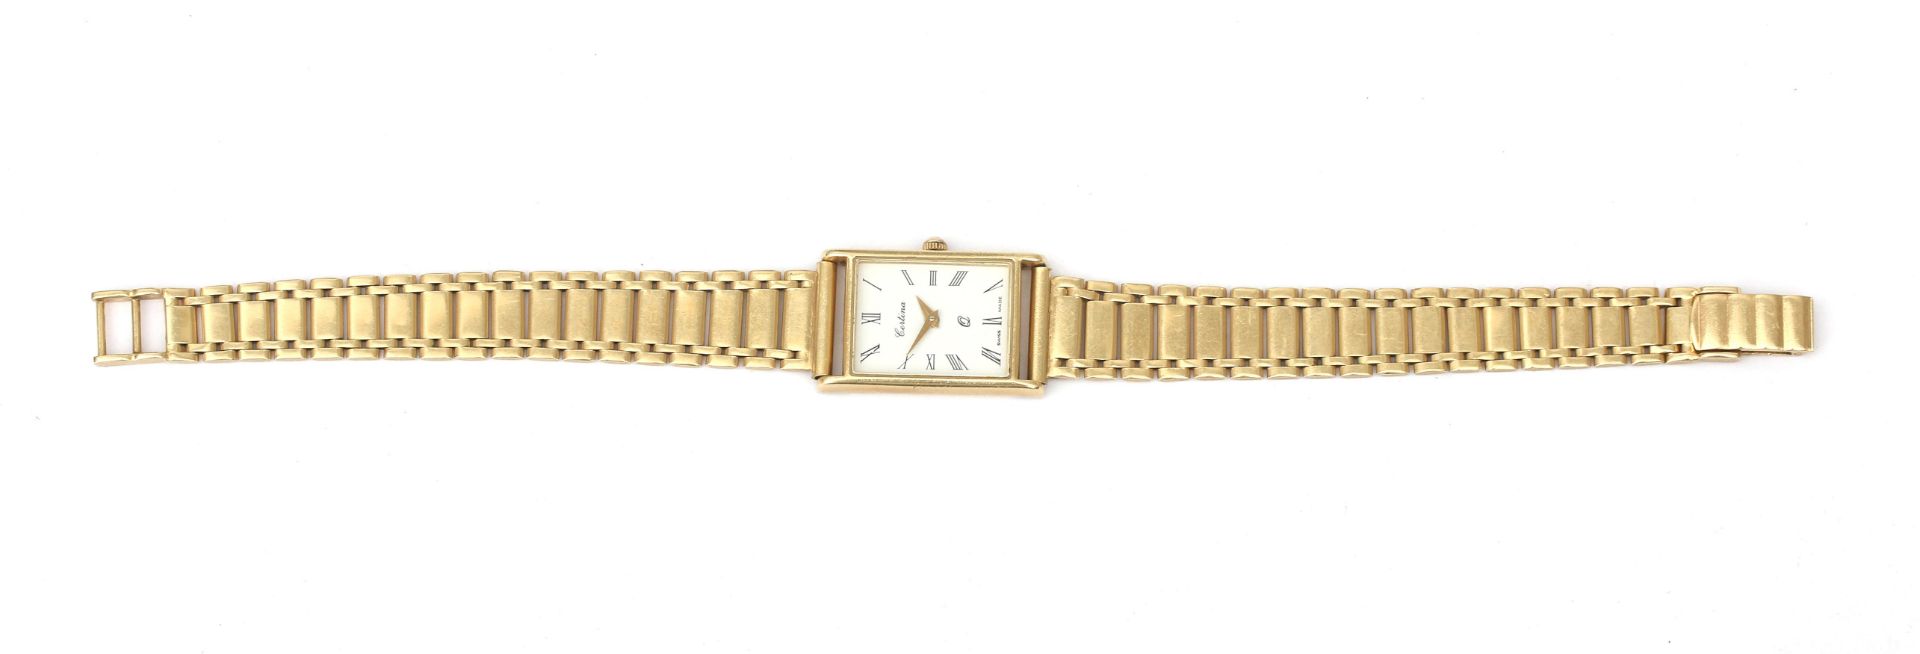 A 14 karat gold Certina lady's wristwatch - Bild 2 aus 2